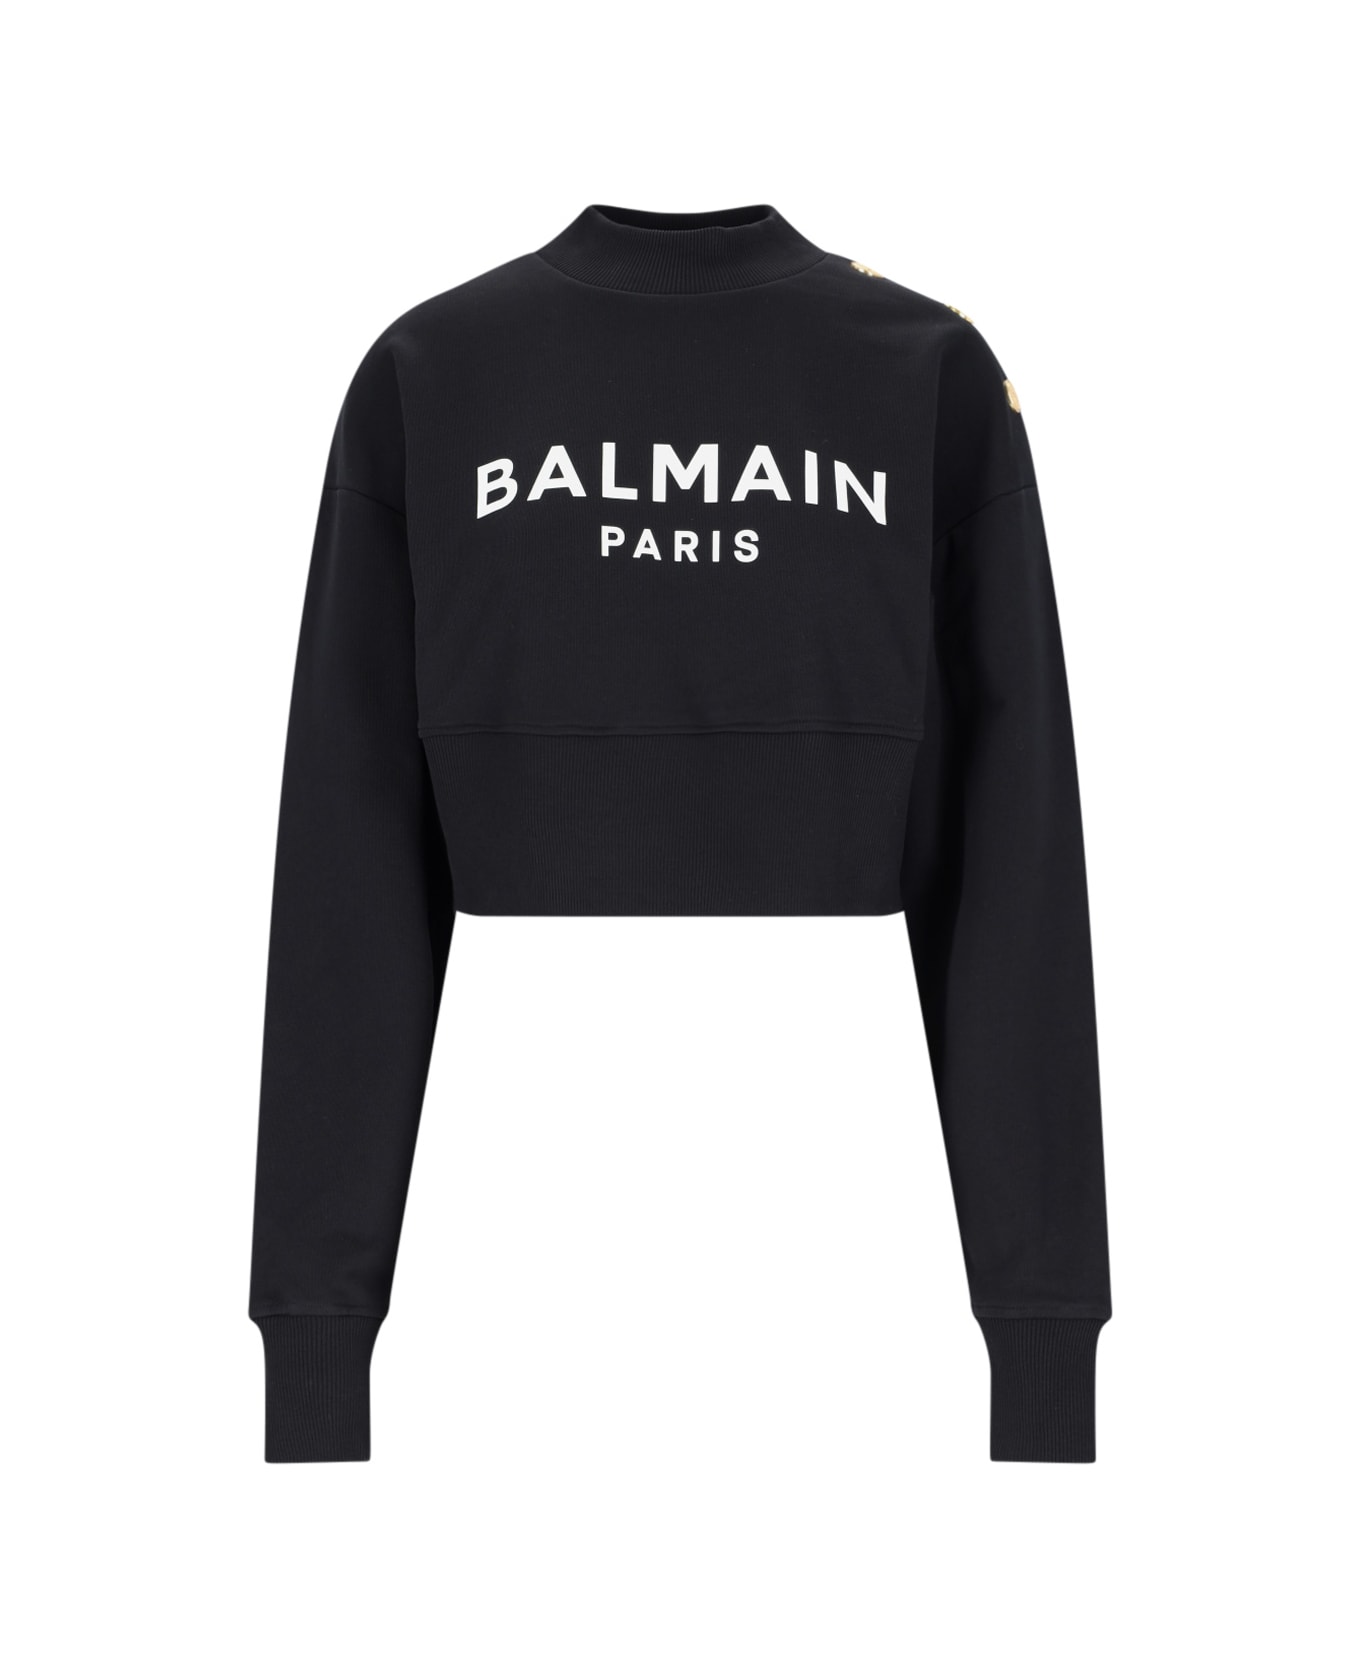 Balmain Cropped Crew Neck Sweatshirt - Black  